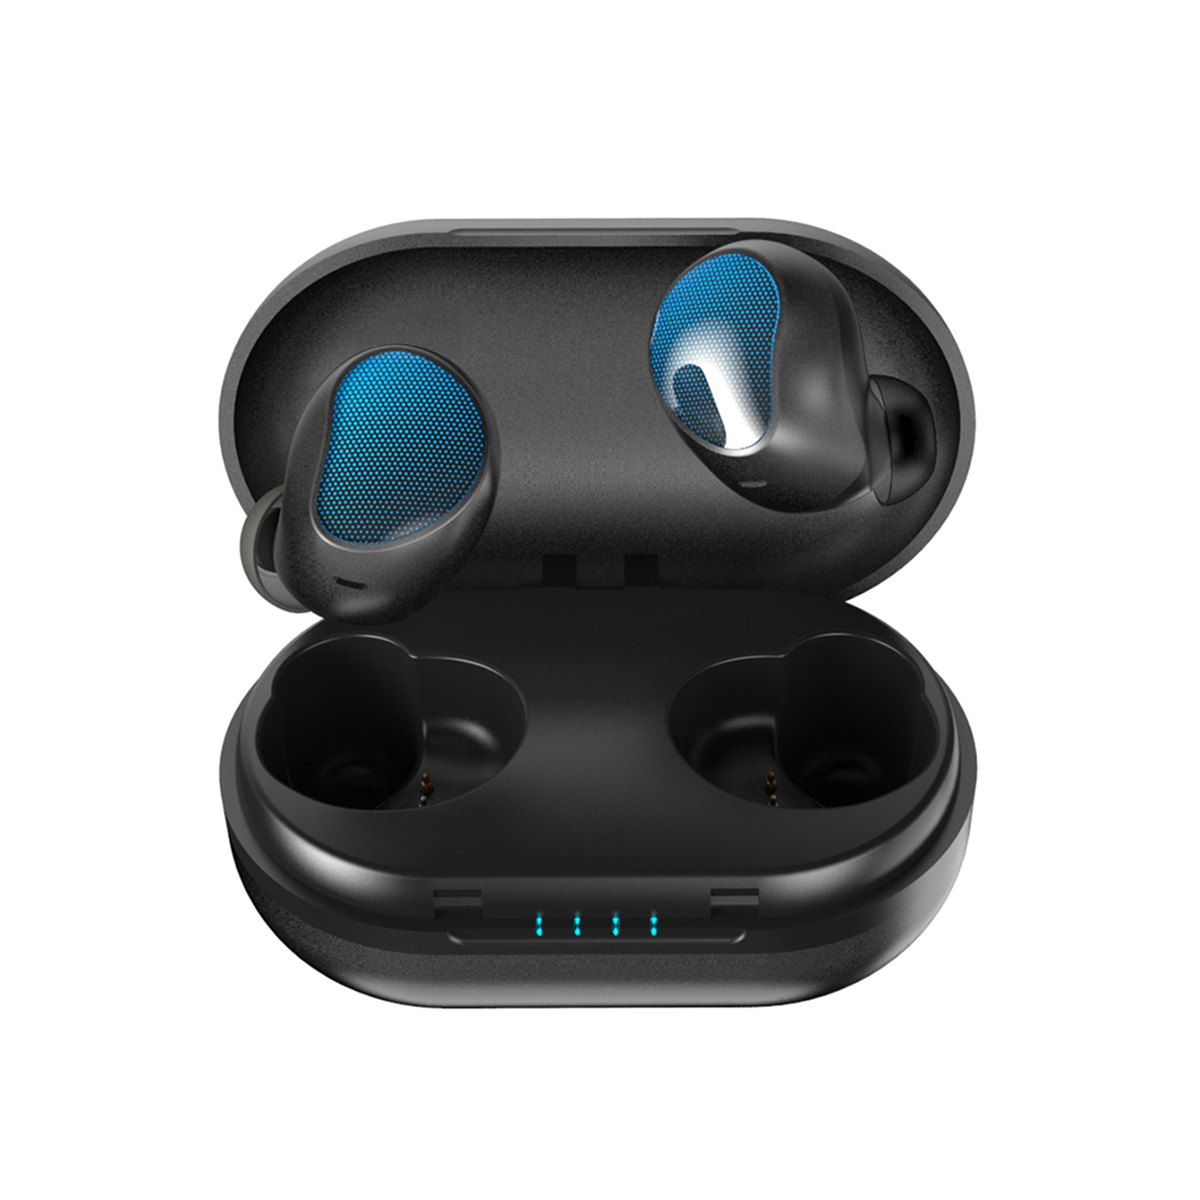 

[bluetooth 5.0] TWS Mini Earphone HiFi Stereo Touch Control Auto Pairing IPX5 Waterproof Sport Headphones with Mic